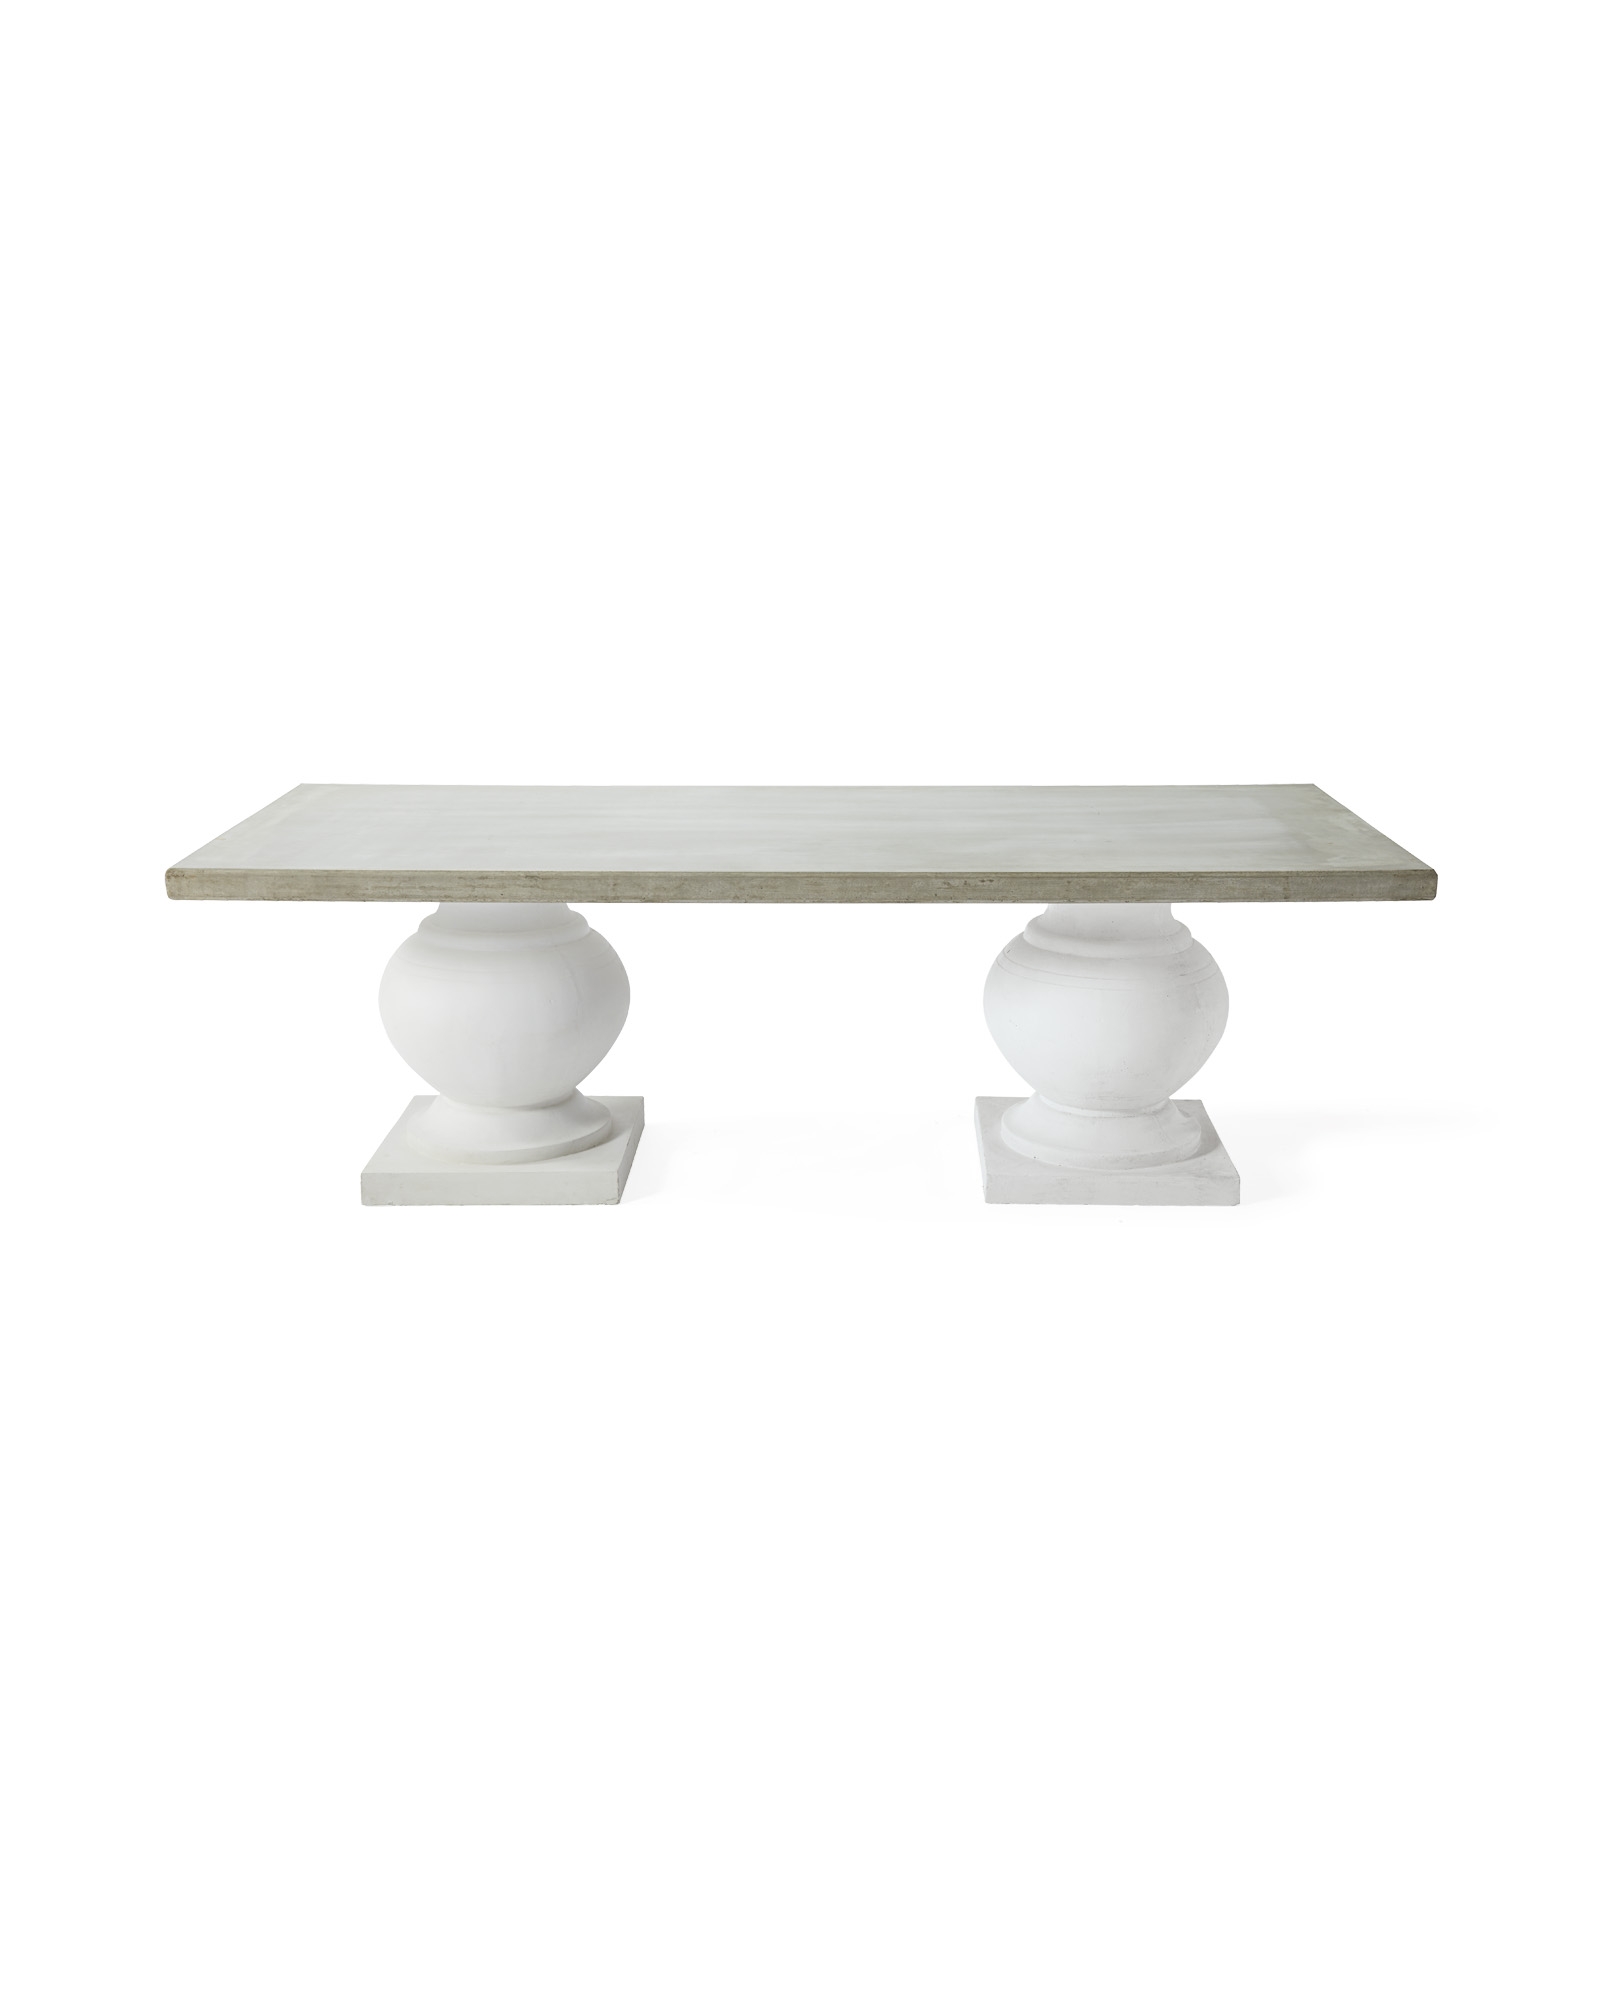 Terrace Dining Table - Fog/White - Image 0